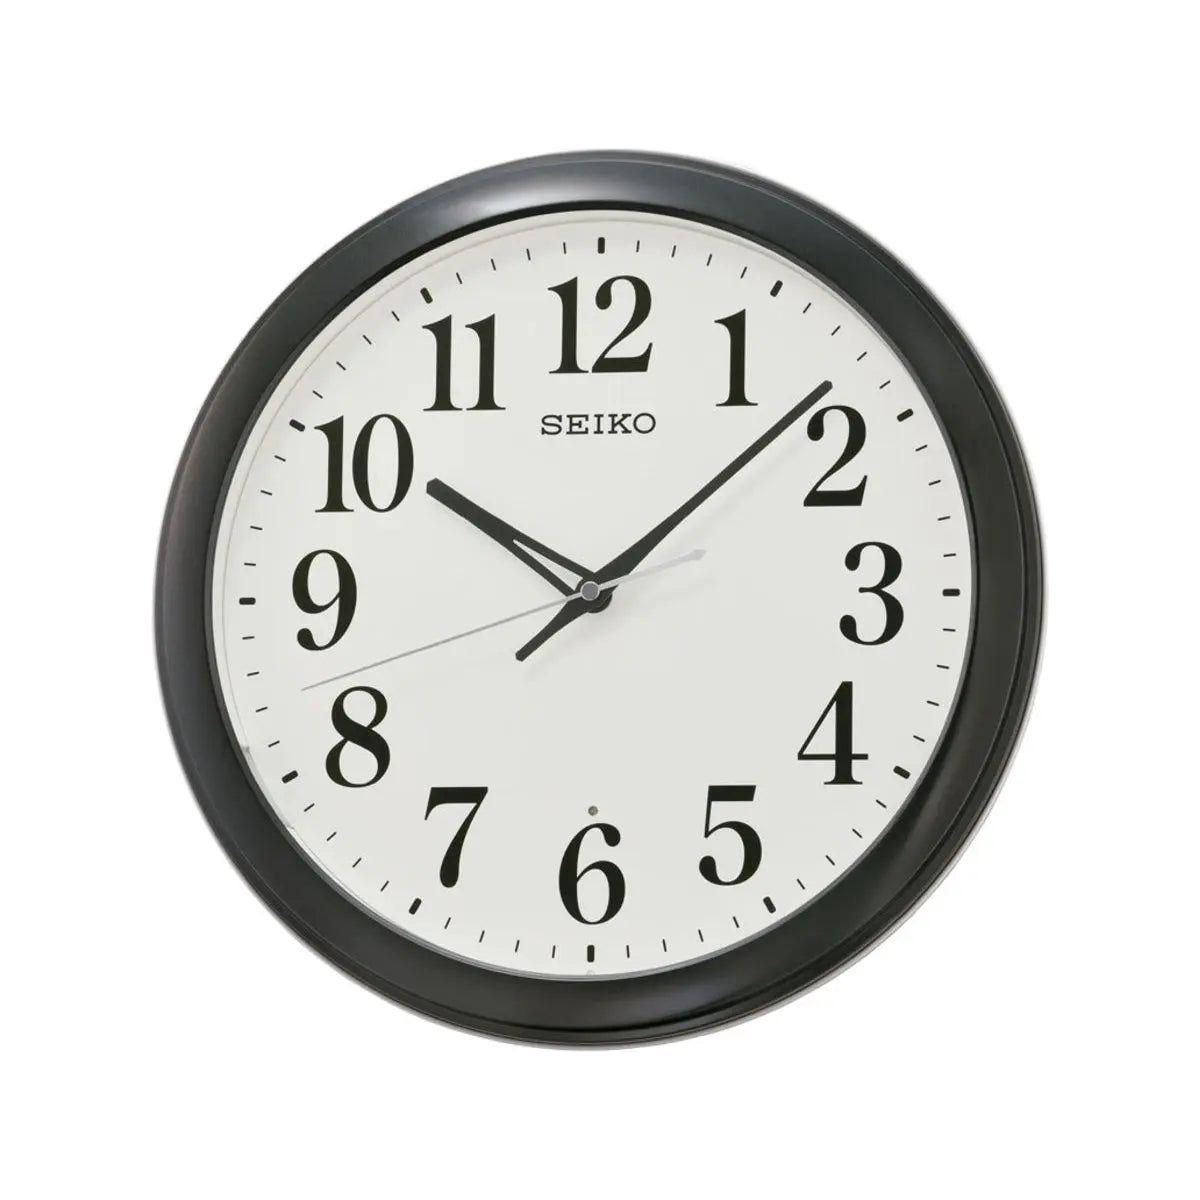 SEIKO CLOCKS SEIKO CLOCKS WATCHES Mod. QXA776K WATCHES seiko-clocks-watches-mod-qxa776k